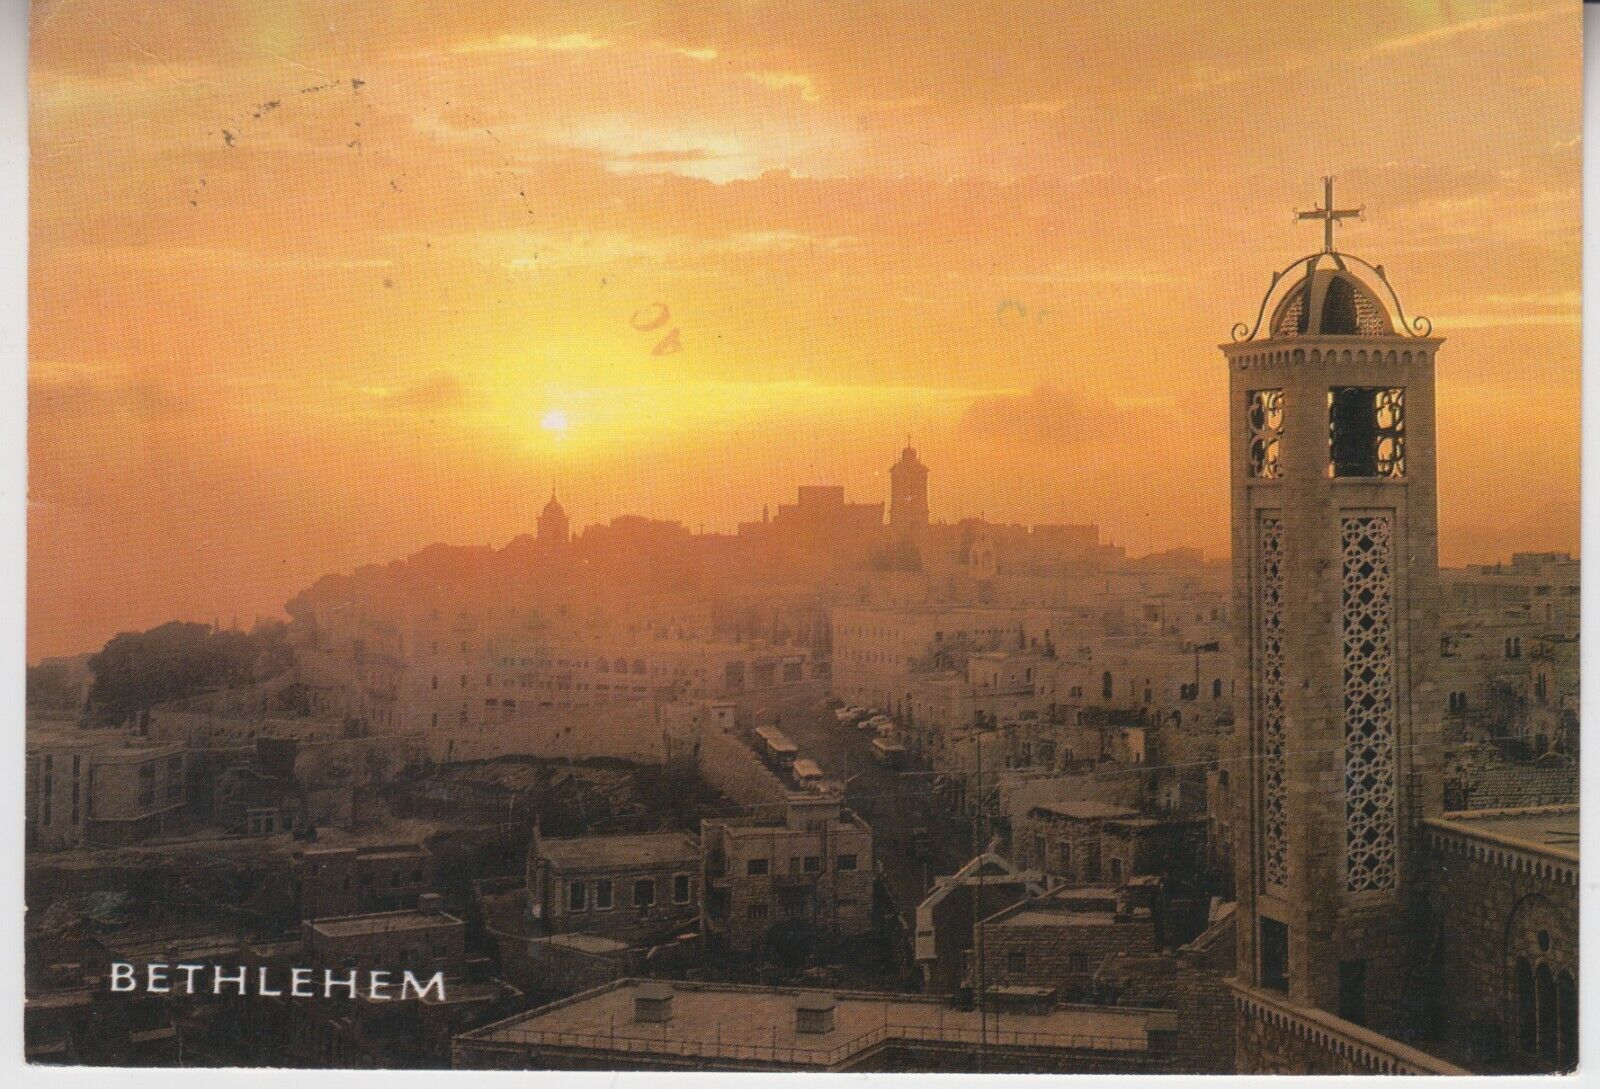 Sunrise at Bethlehem. Le lever du soleil a Betlehem. c1985. Vintage Postcard